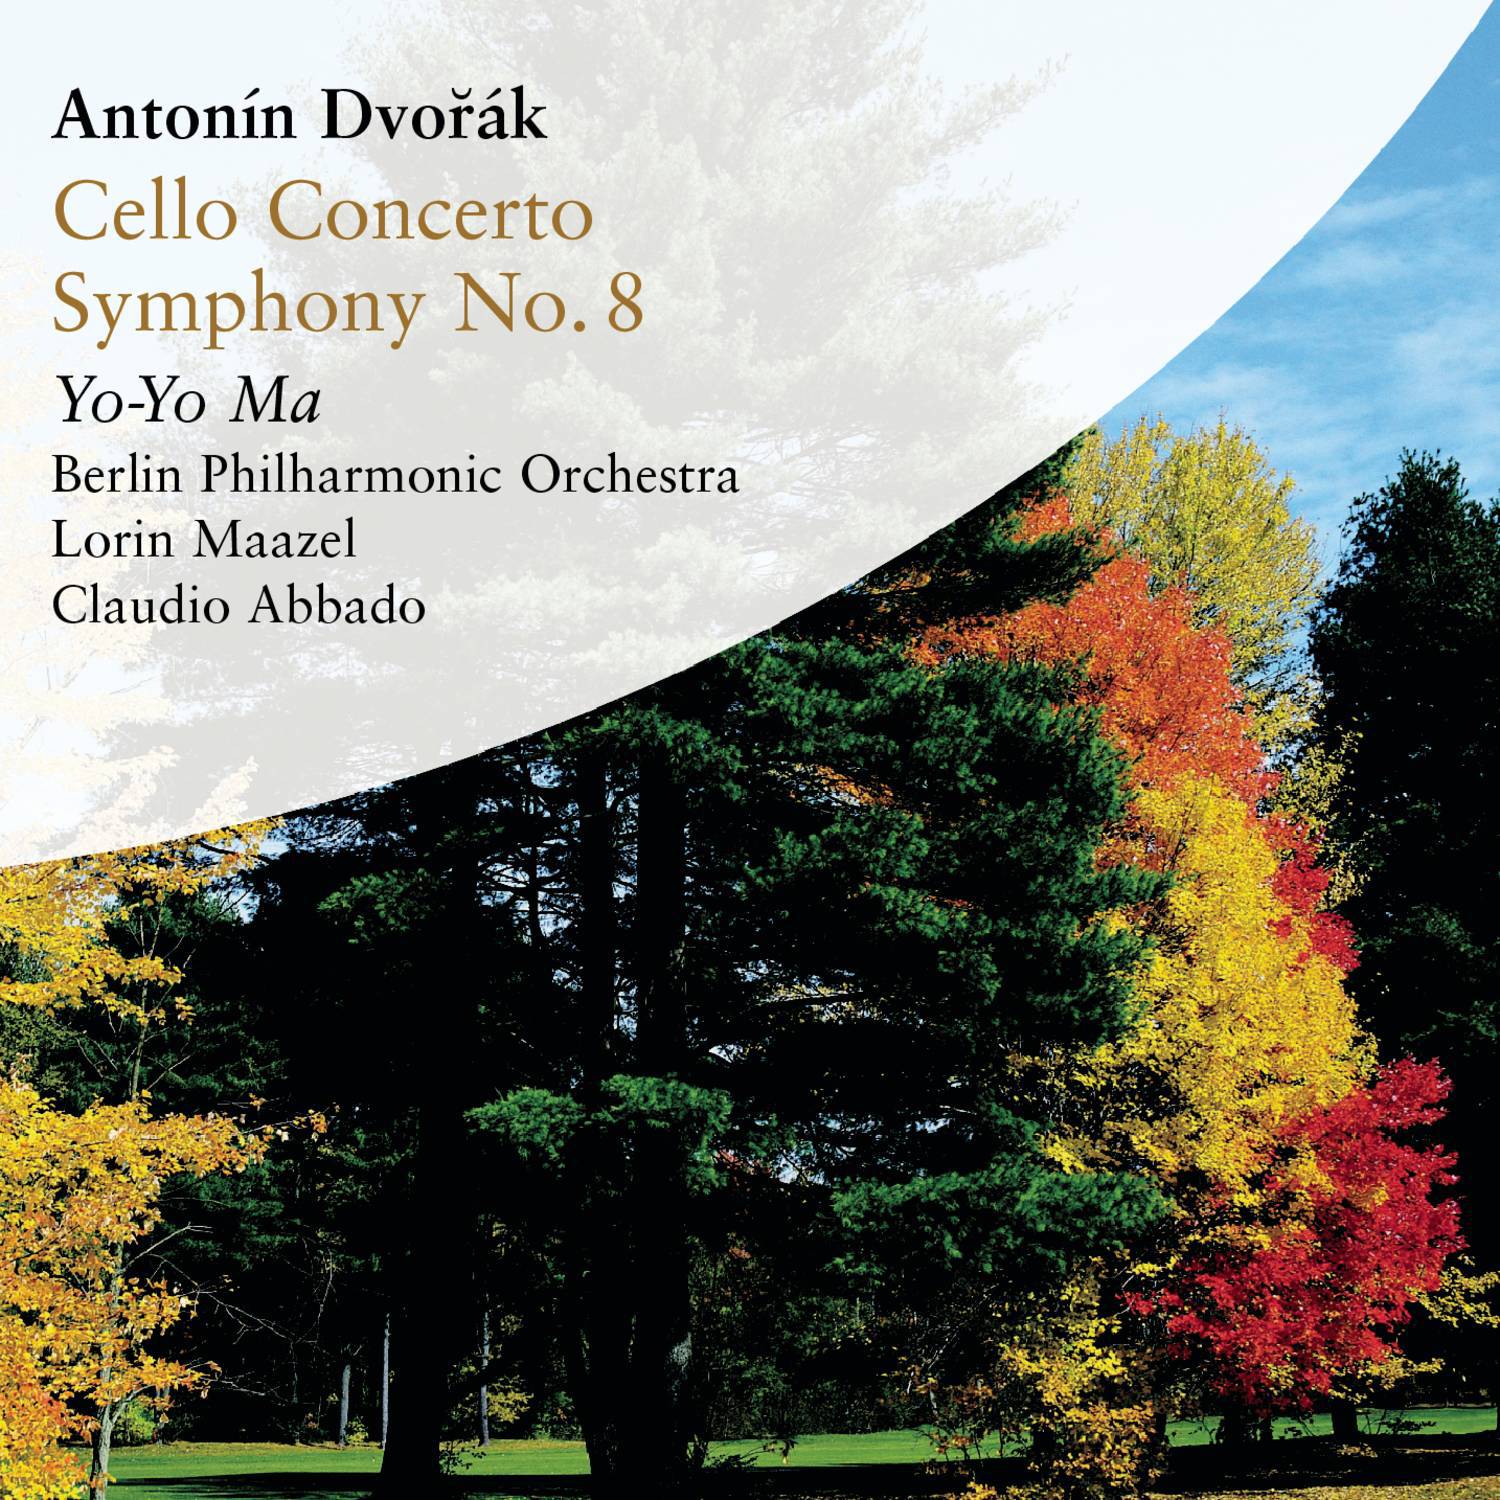 Concerto for Cello and Orchestra in B Minor, Op. 104, B. 191: I. Allegro